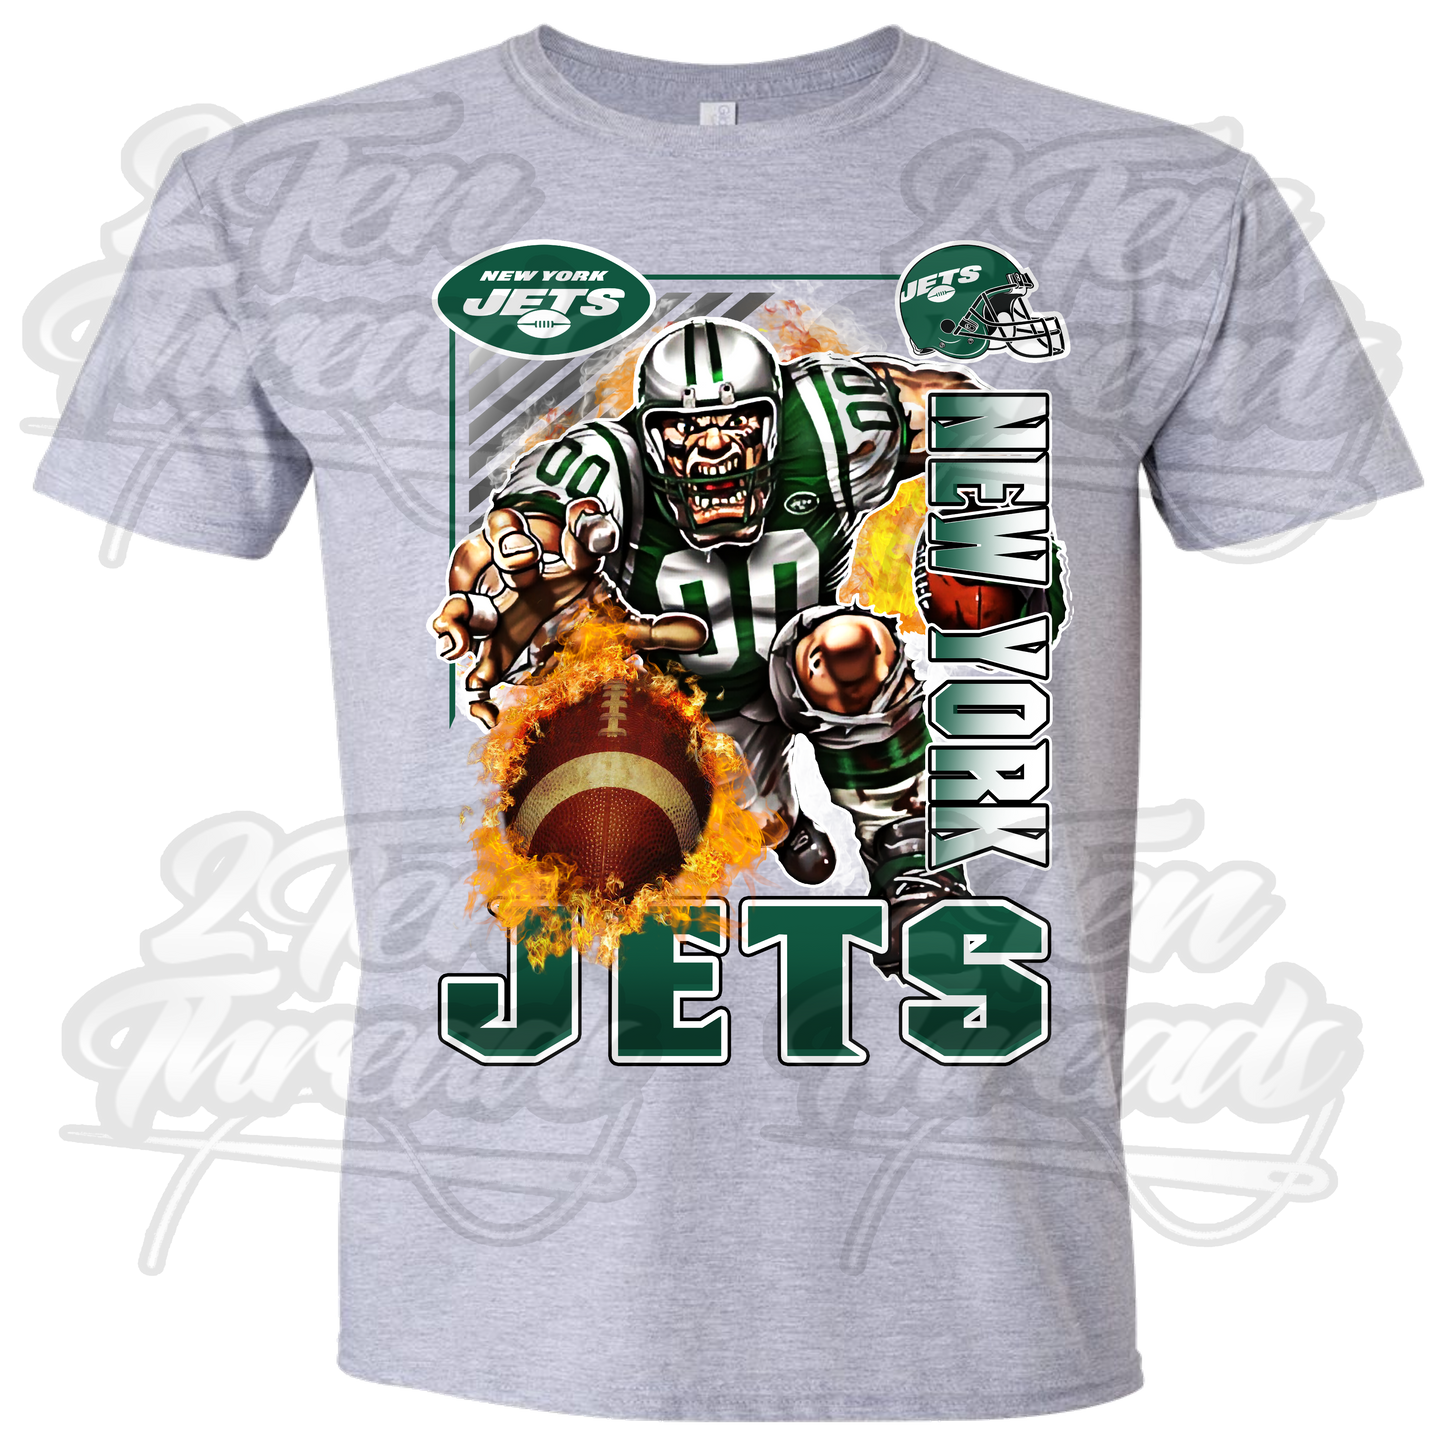 New York Jets Shirt